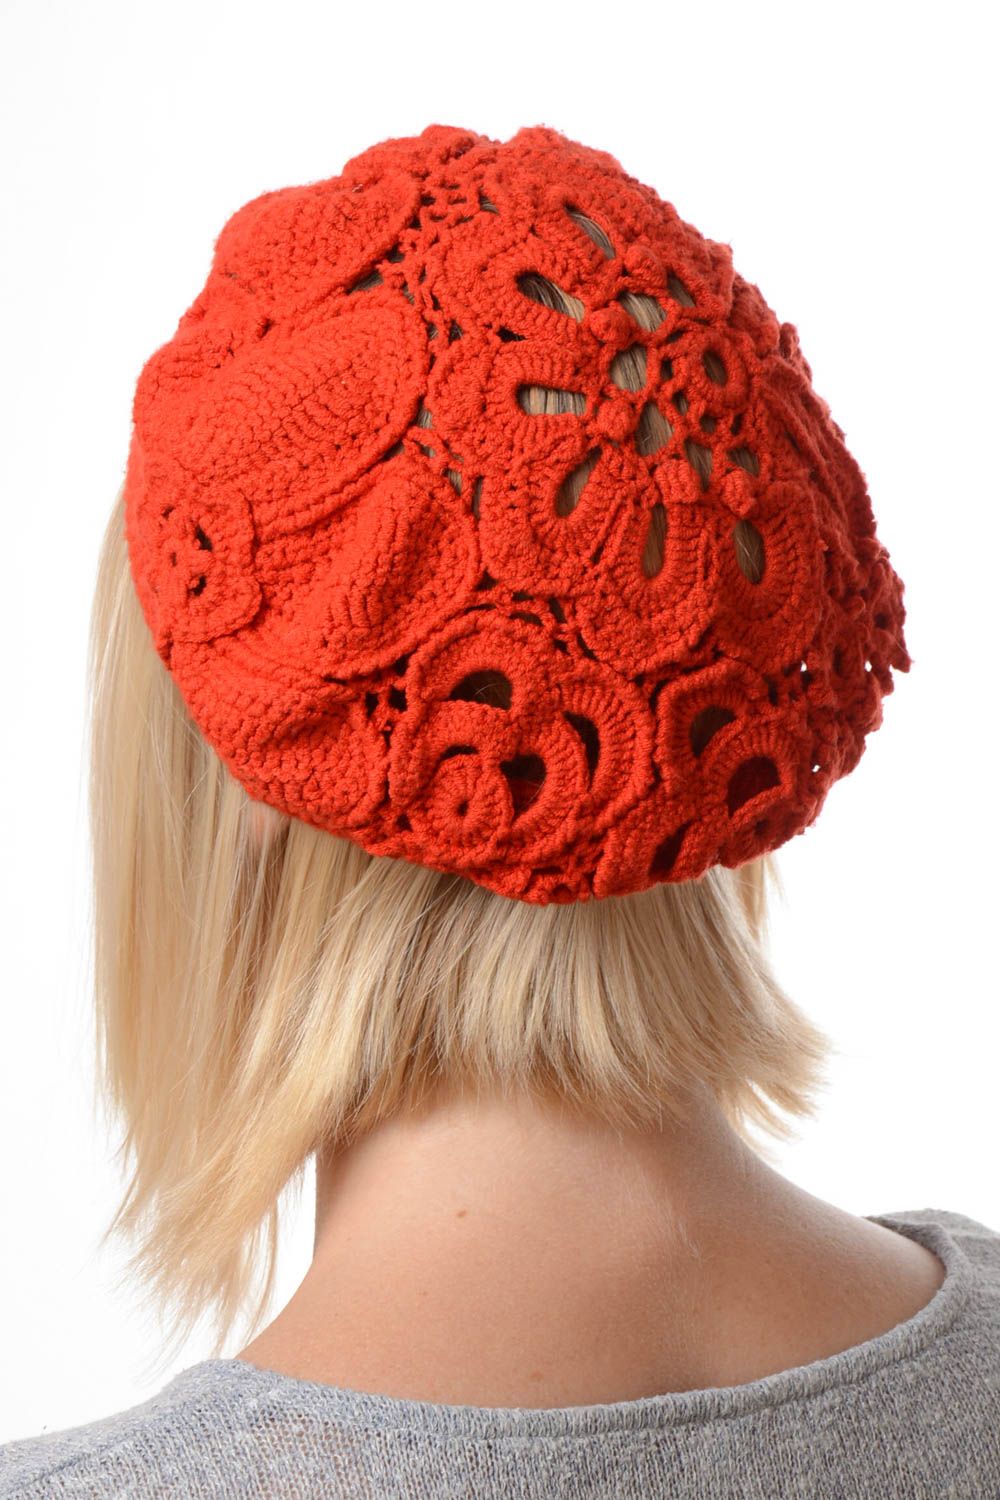 Winter hat for women handmade accessories crochet hat fashion hats gift ideas photo 2